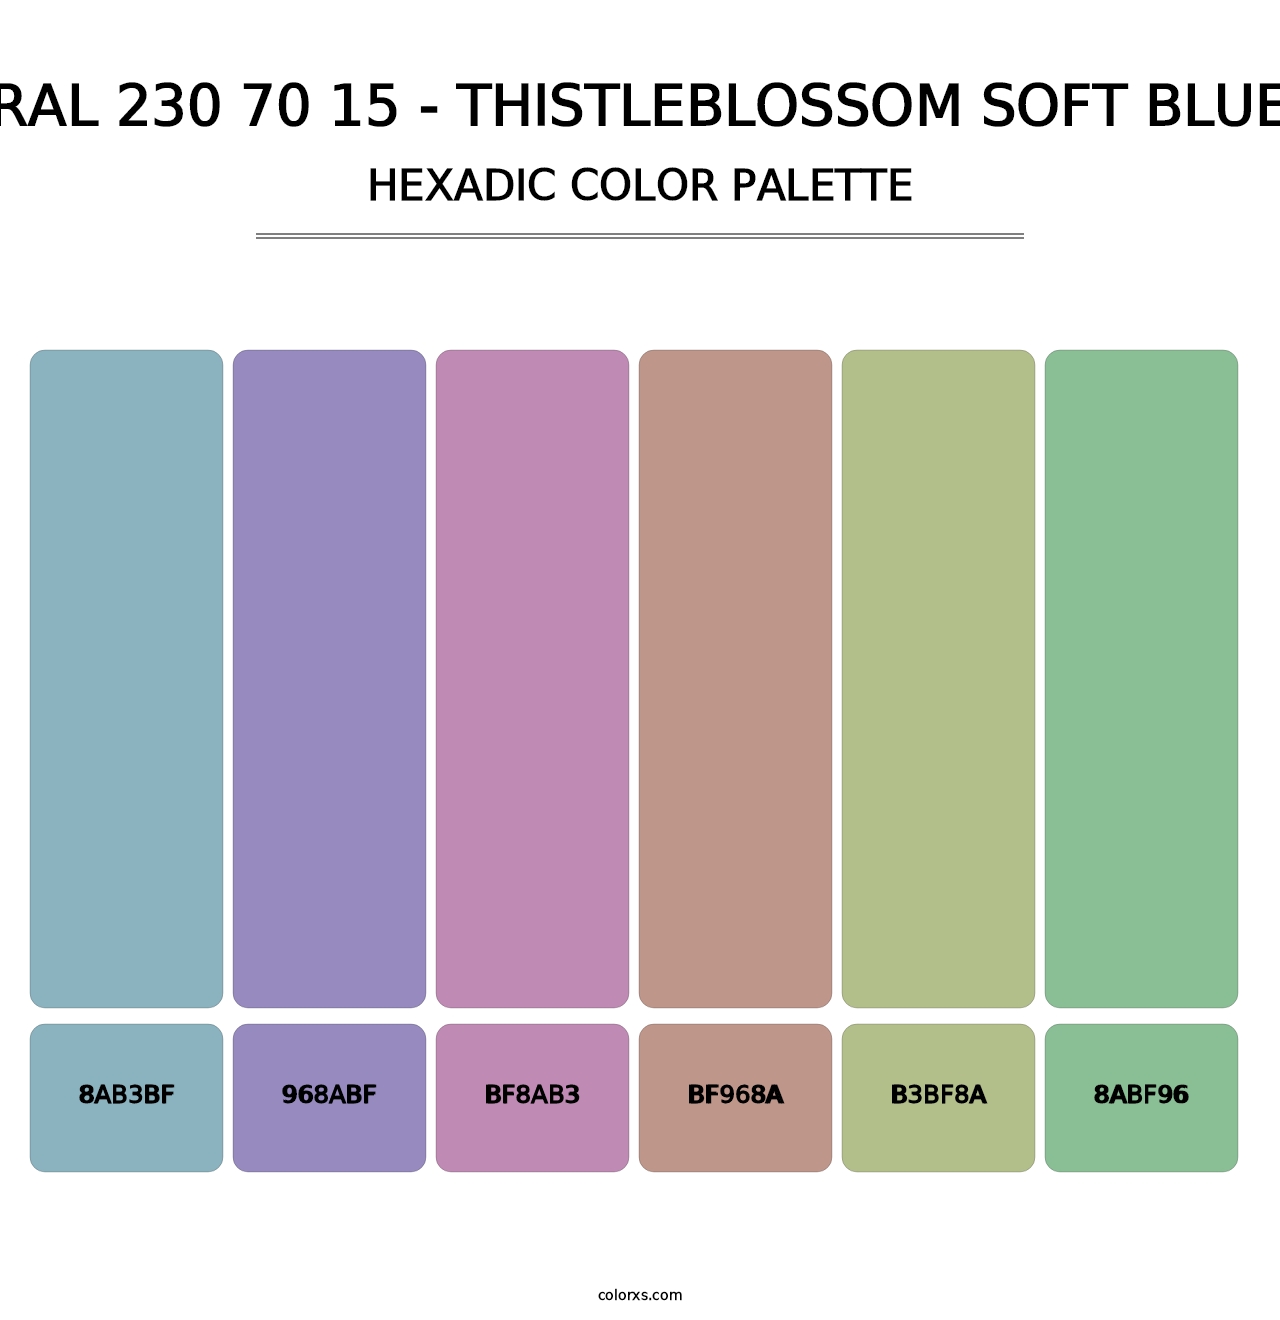 RAL 230 70 15 - Thistleblossom Soft Blue - Hexadic Color Palette